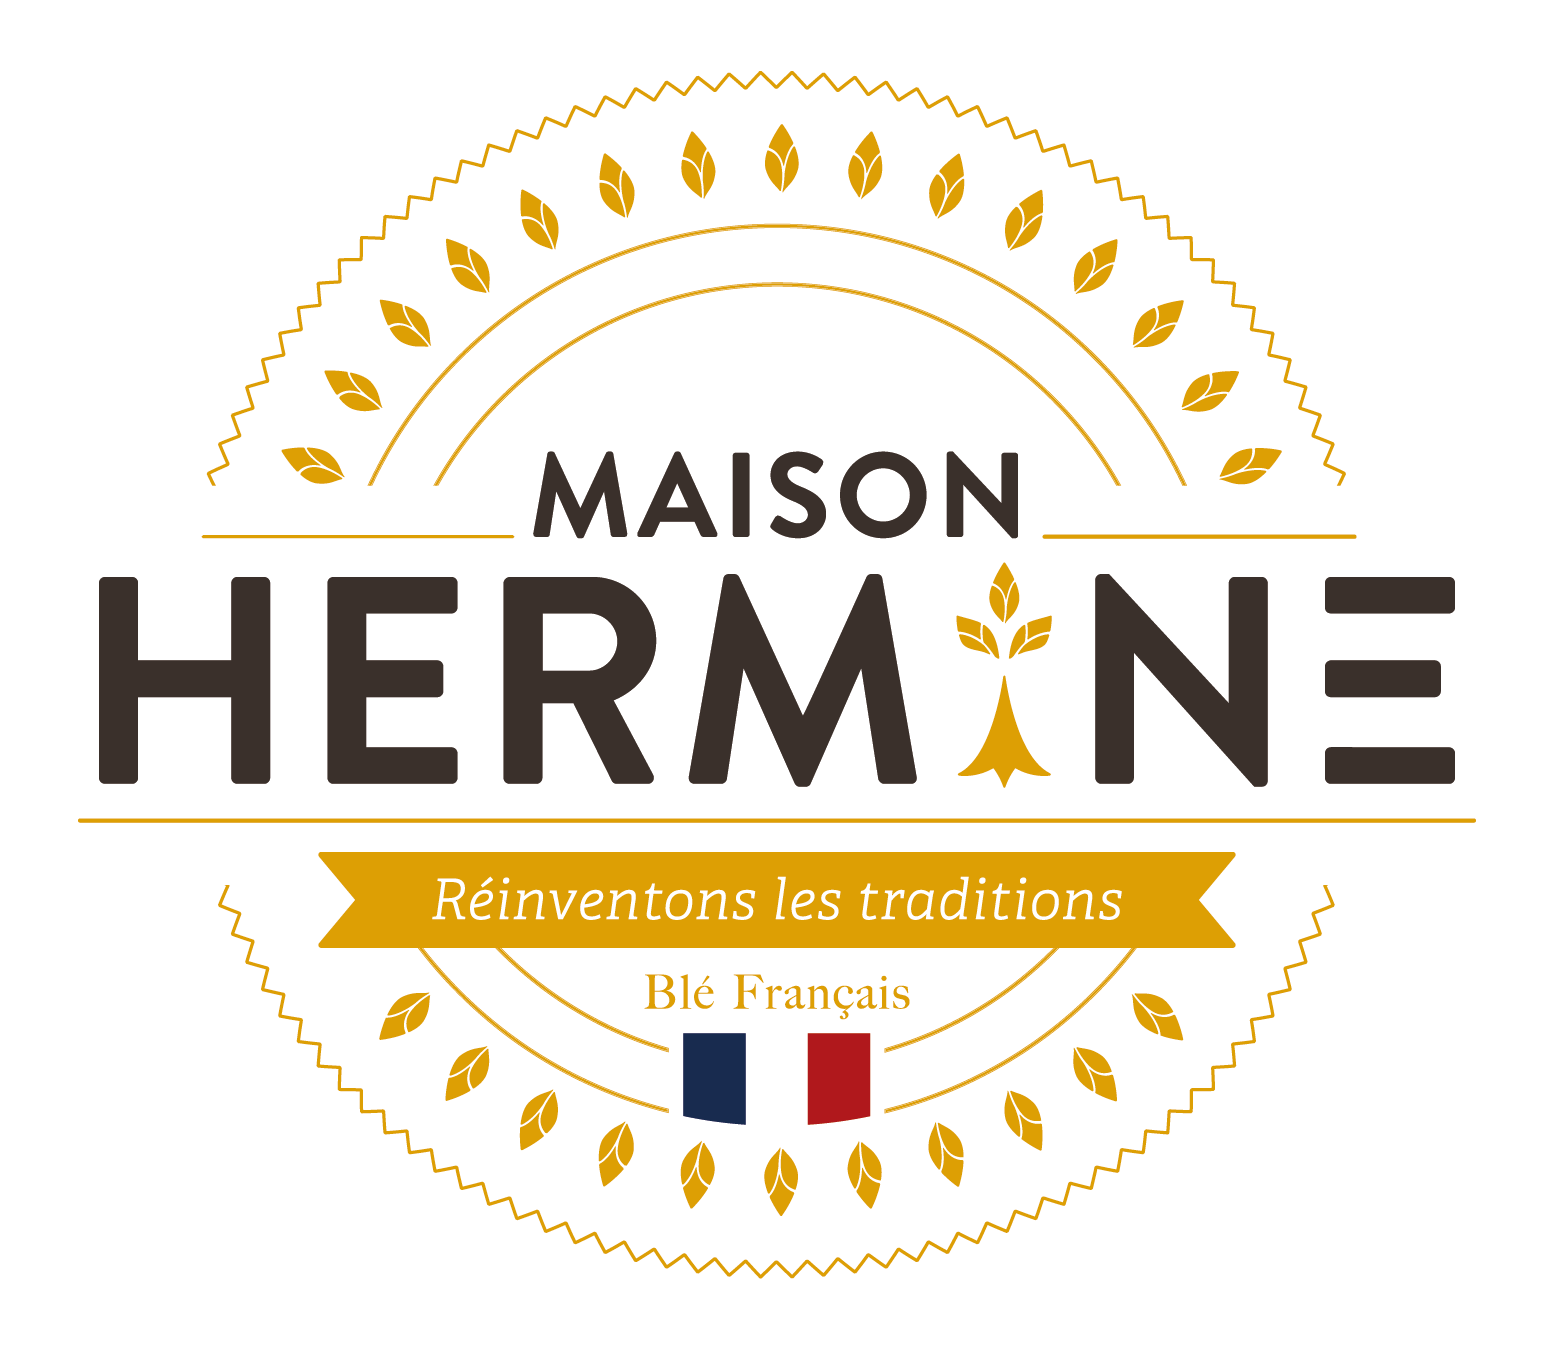 MAISON HERMINE